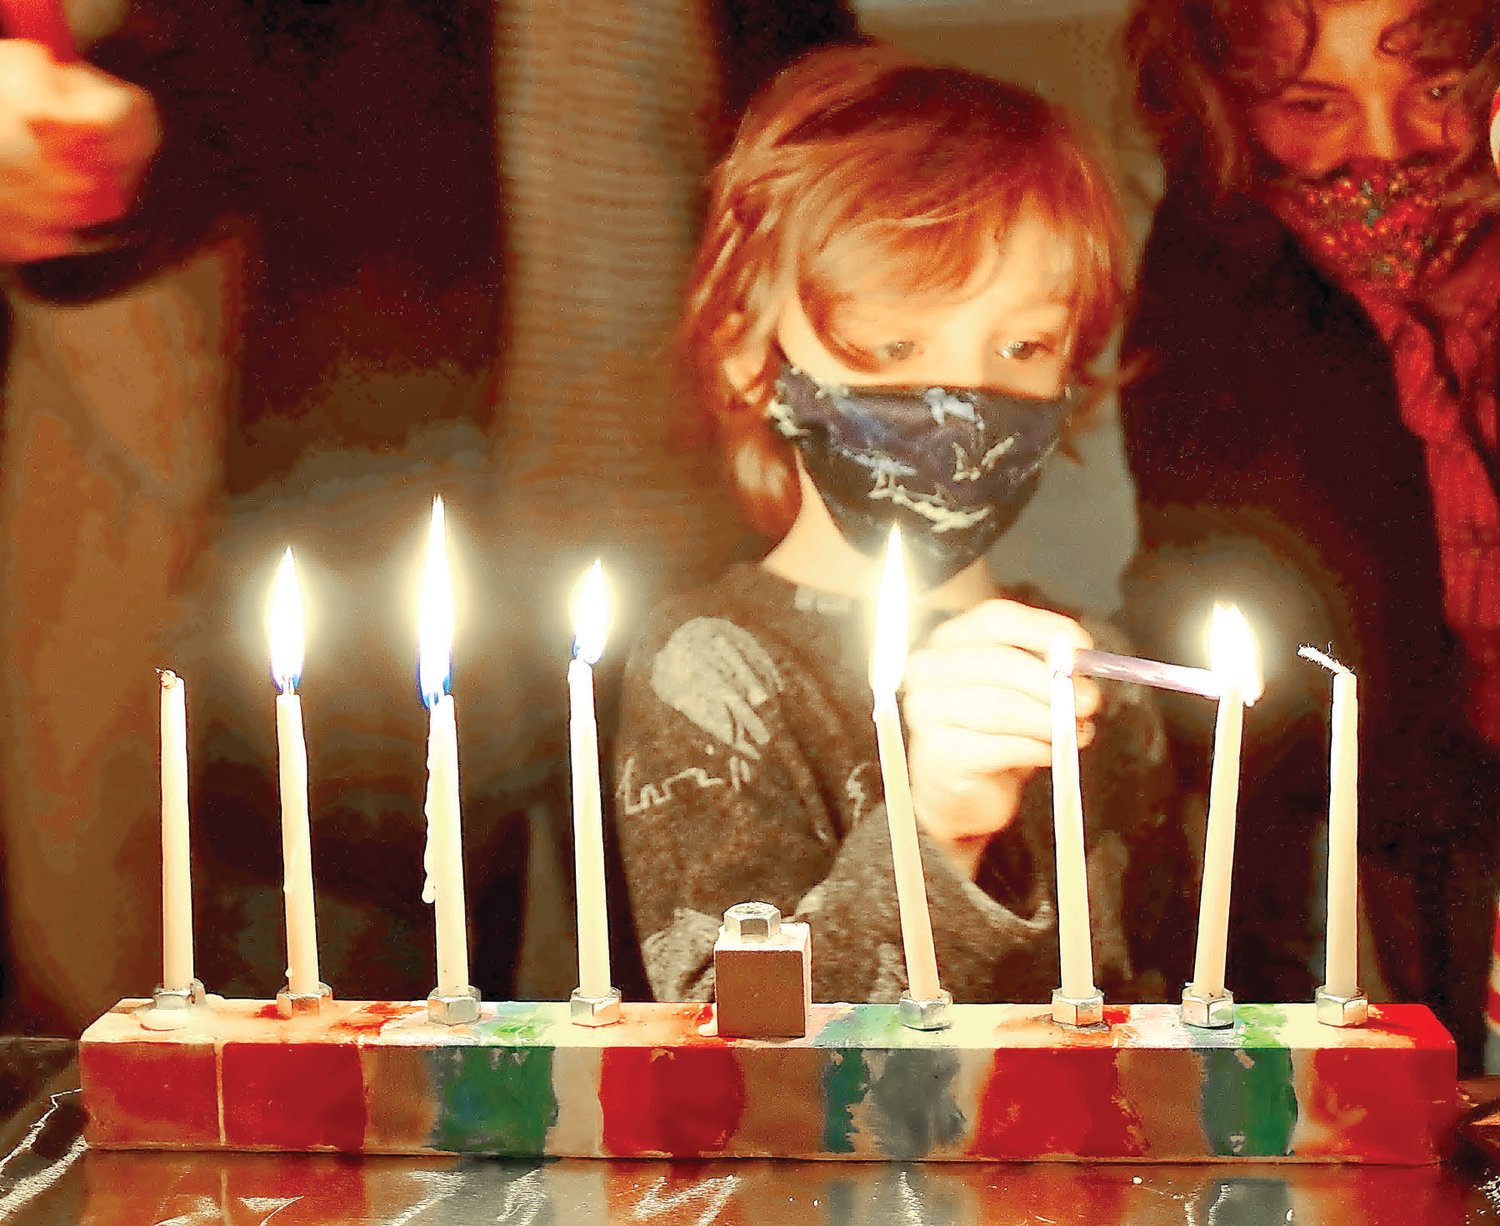 Fielding Strumfels, 5, lights the candles on his menorah.